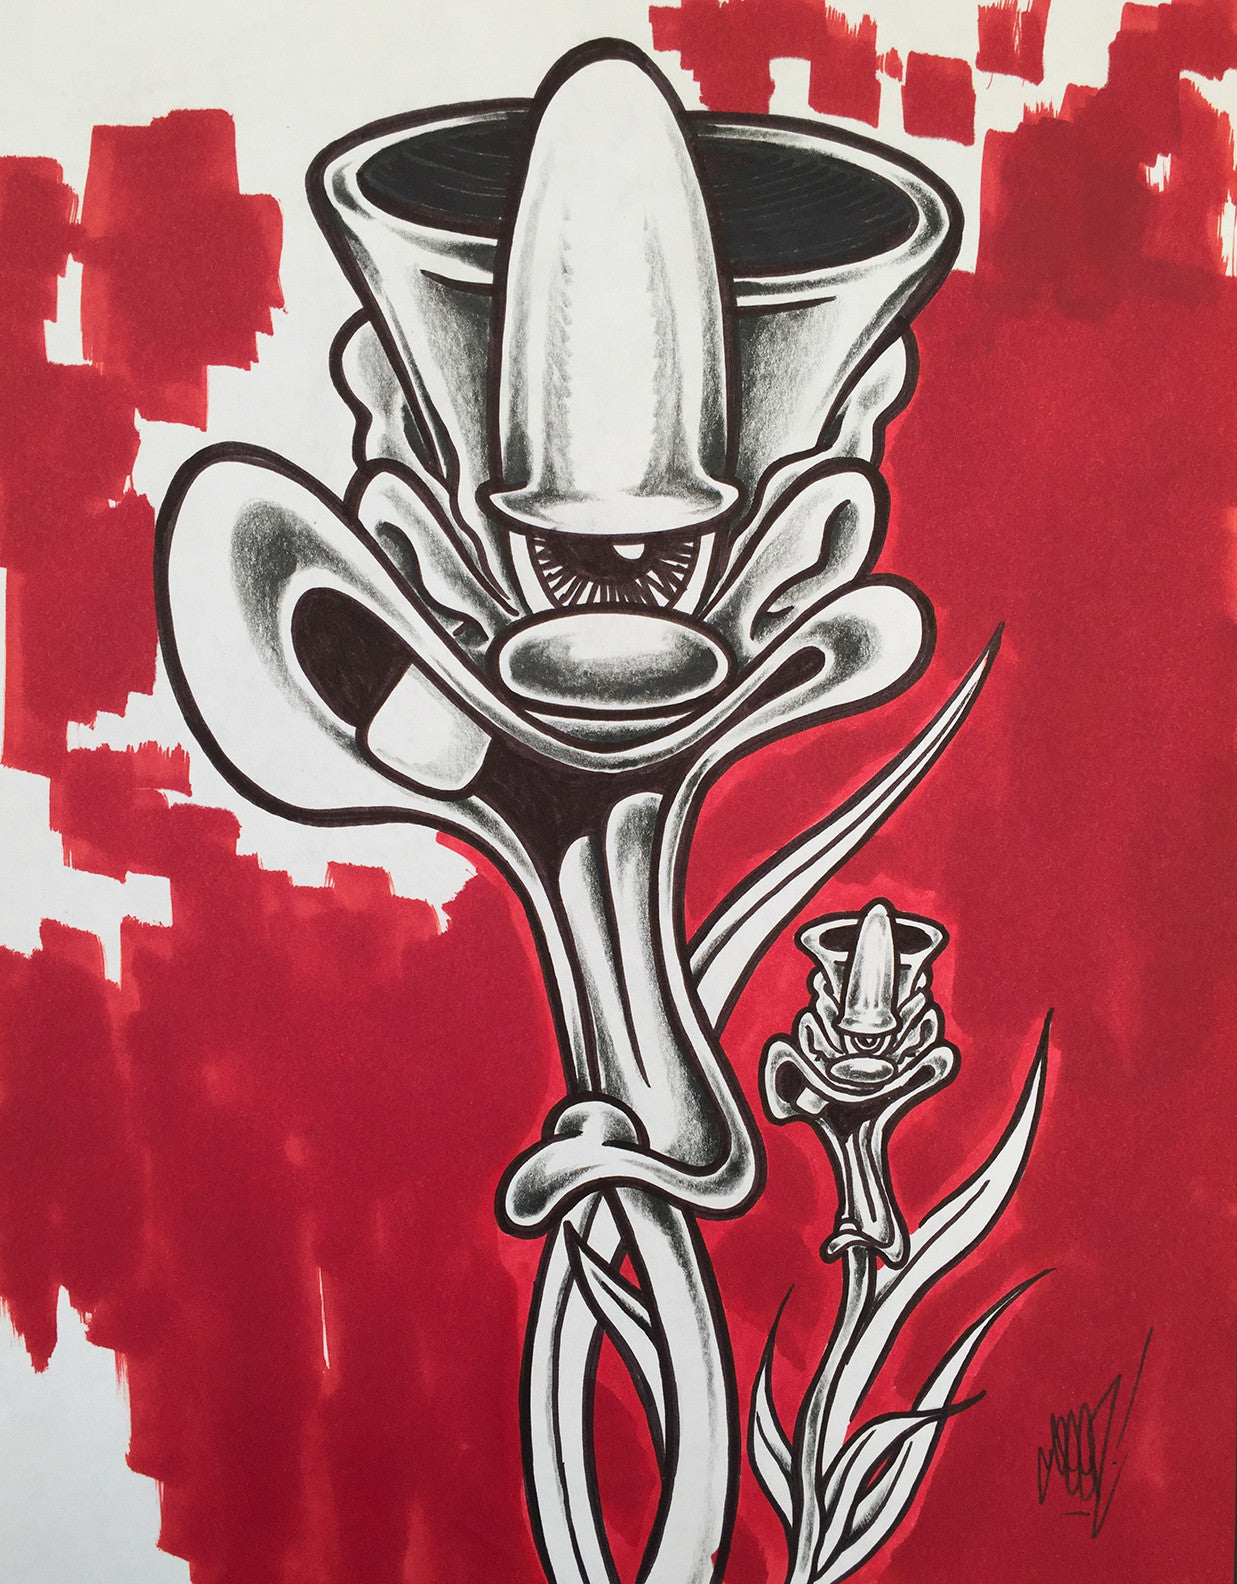 GRAFFITI ARTIST SEEN - "Looney Lenny Flowers" - Drawing